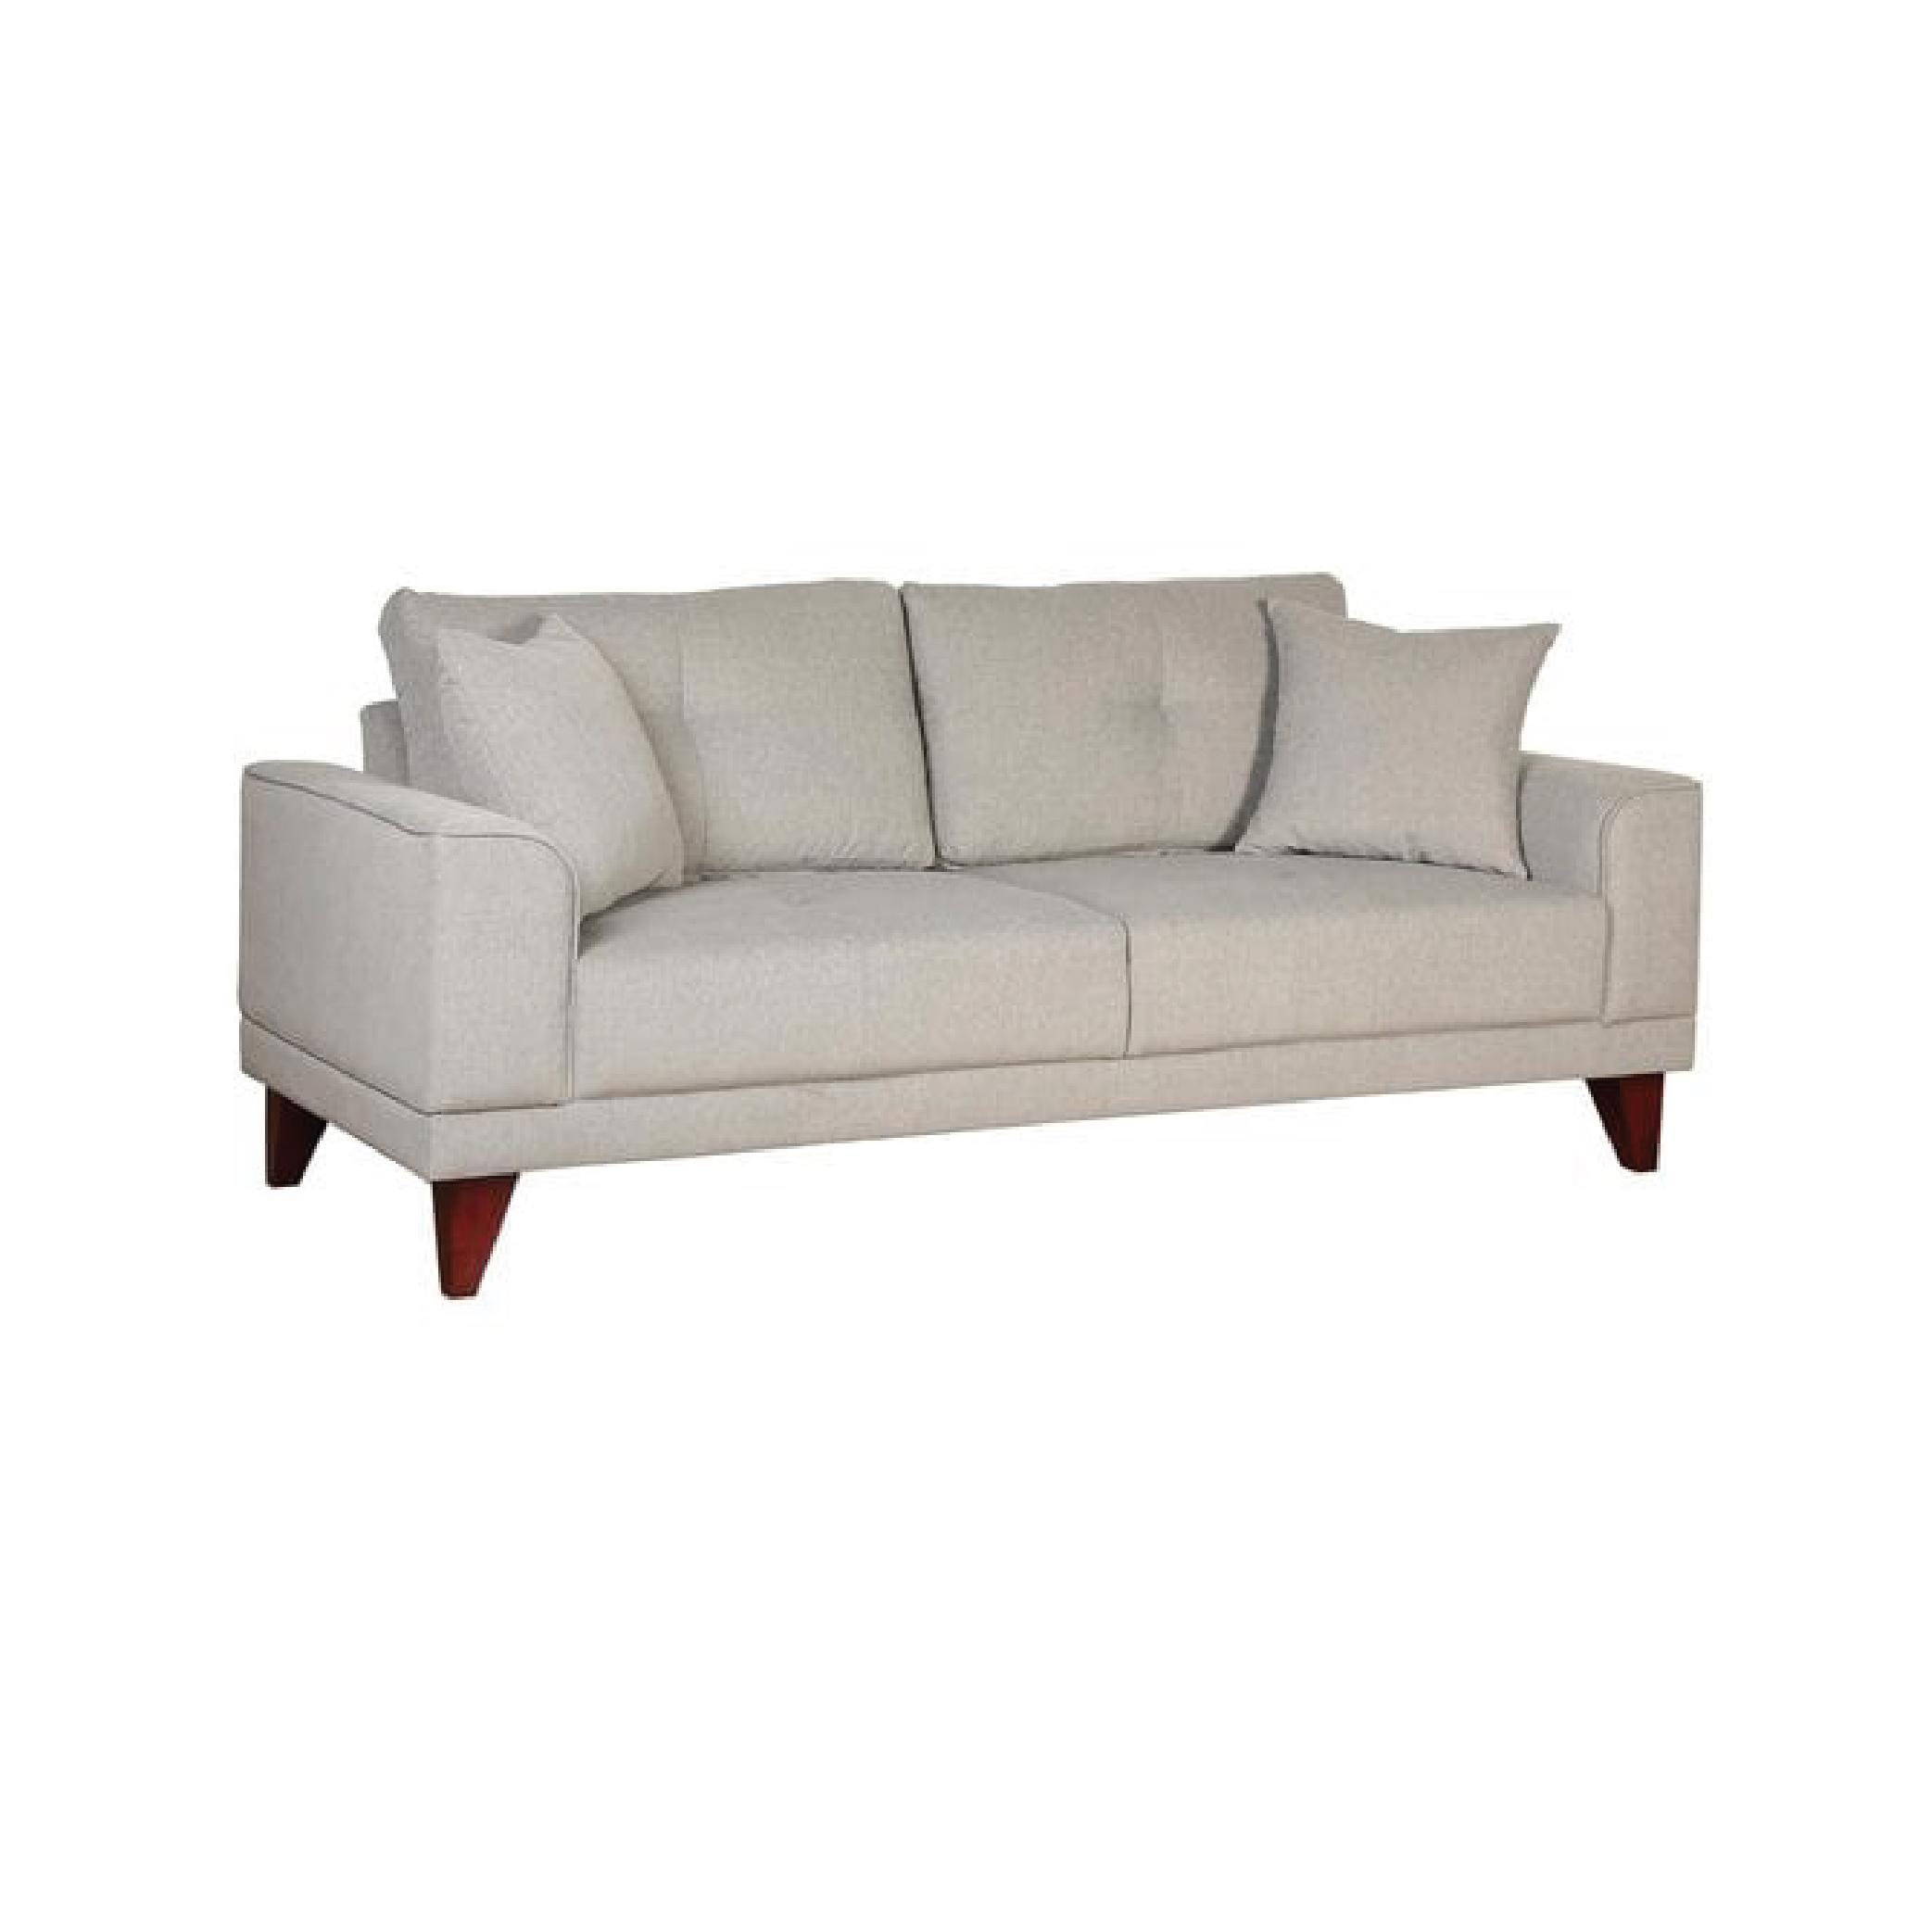 Arco Three Seater Sofa in Ash Grey Colour